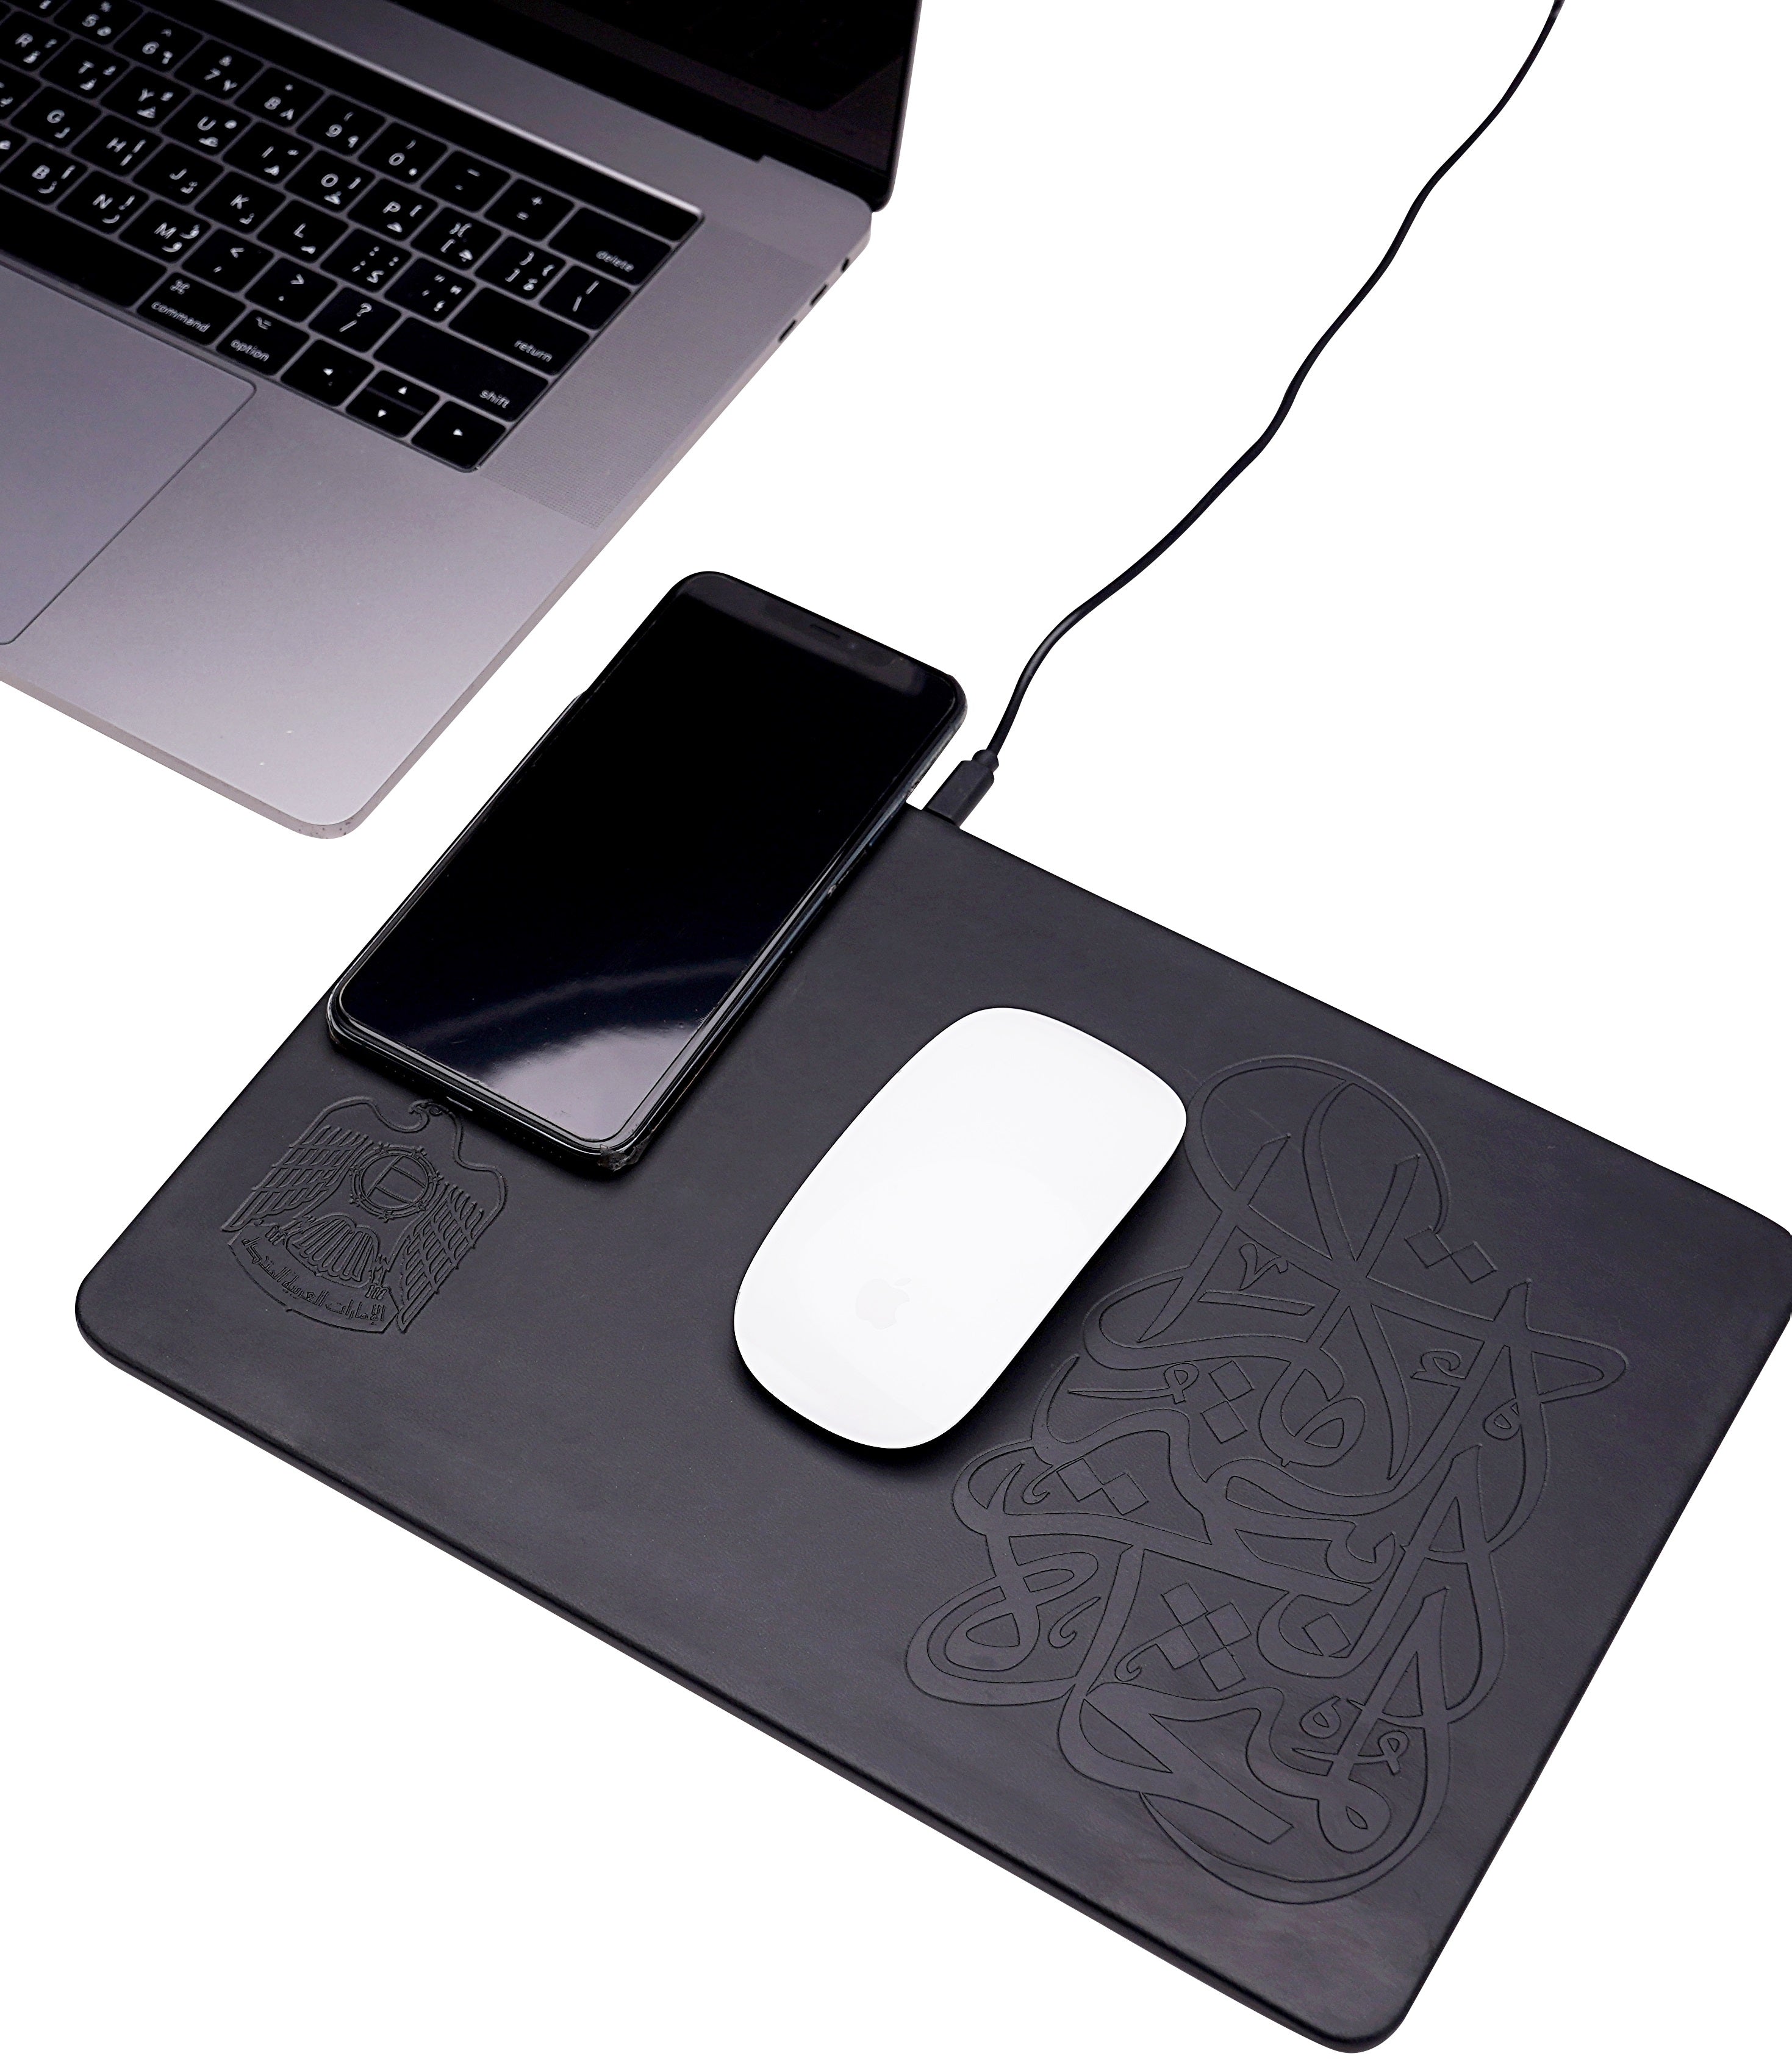 Mousepad | gift online | gift ideas dubai